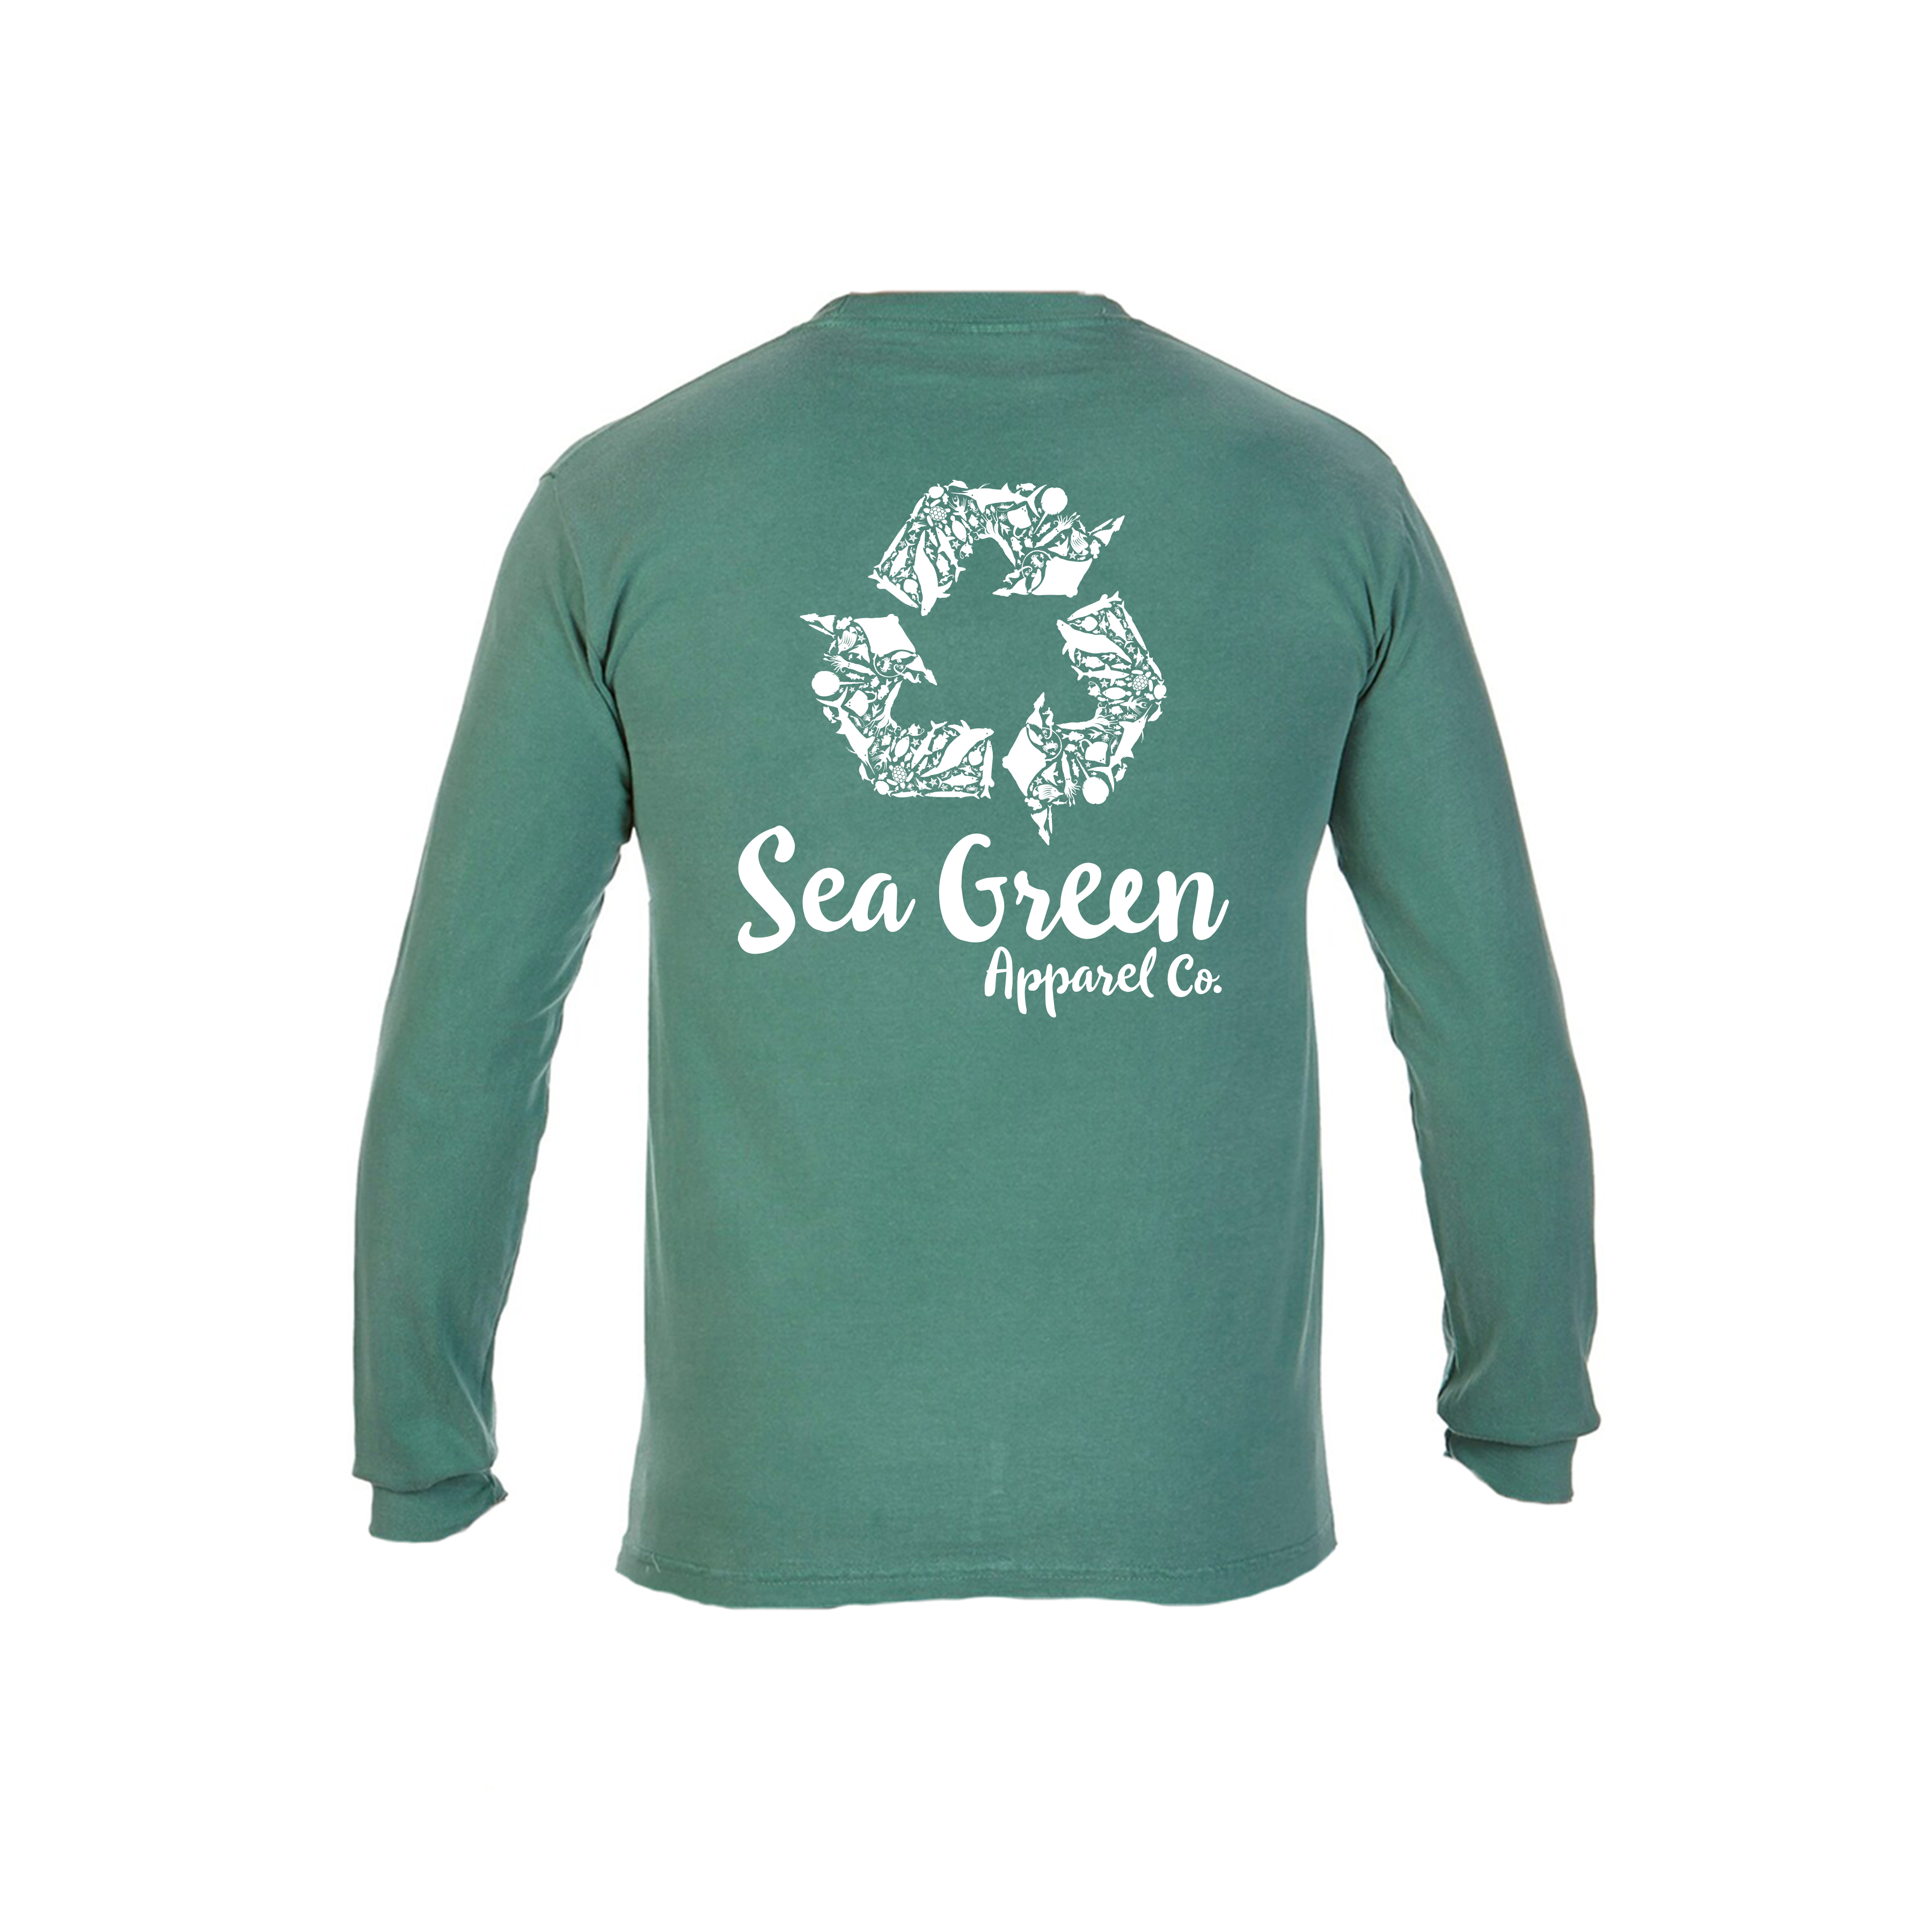 Sea Green Apparel original white turtle logo on left chest and original white recycle logo on center back Classic Fit Open sleeve and waist Even hemline